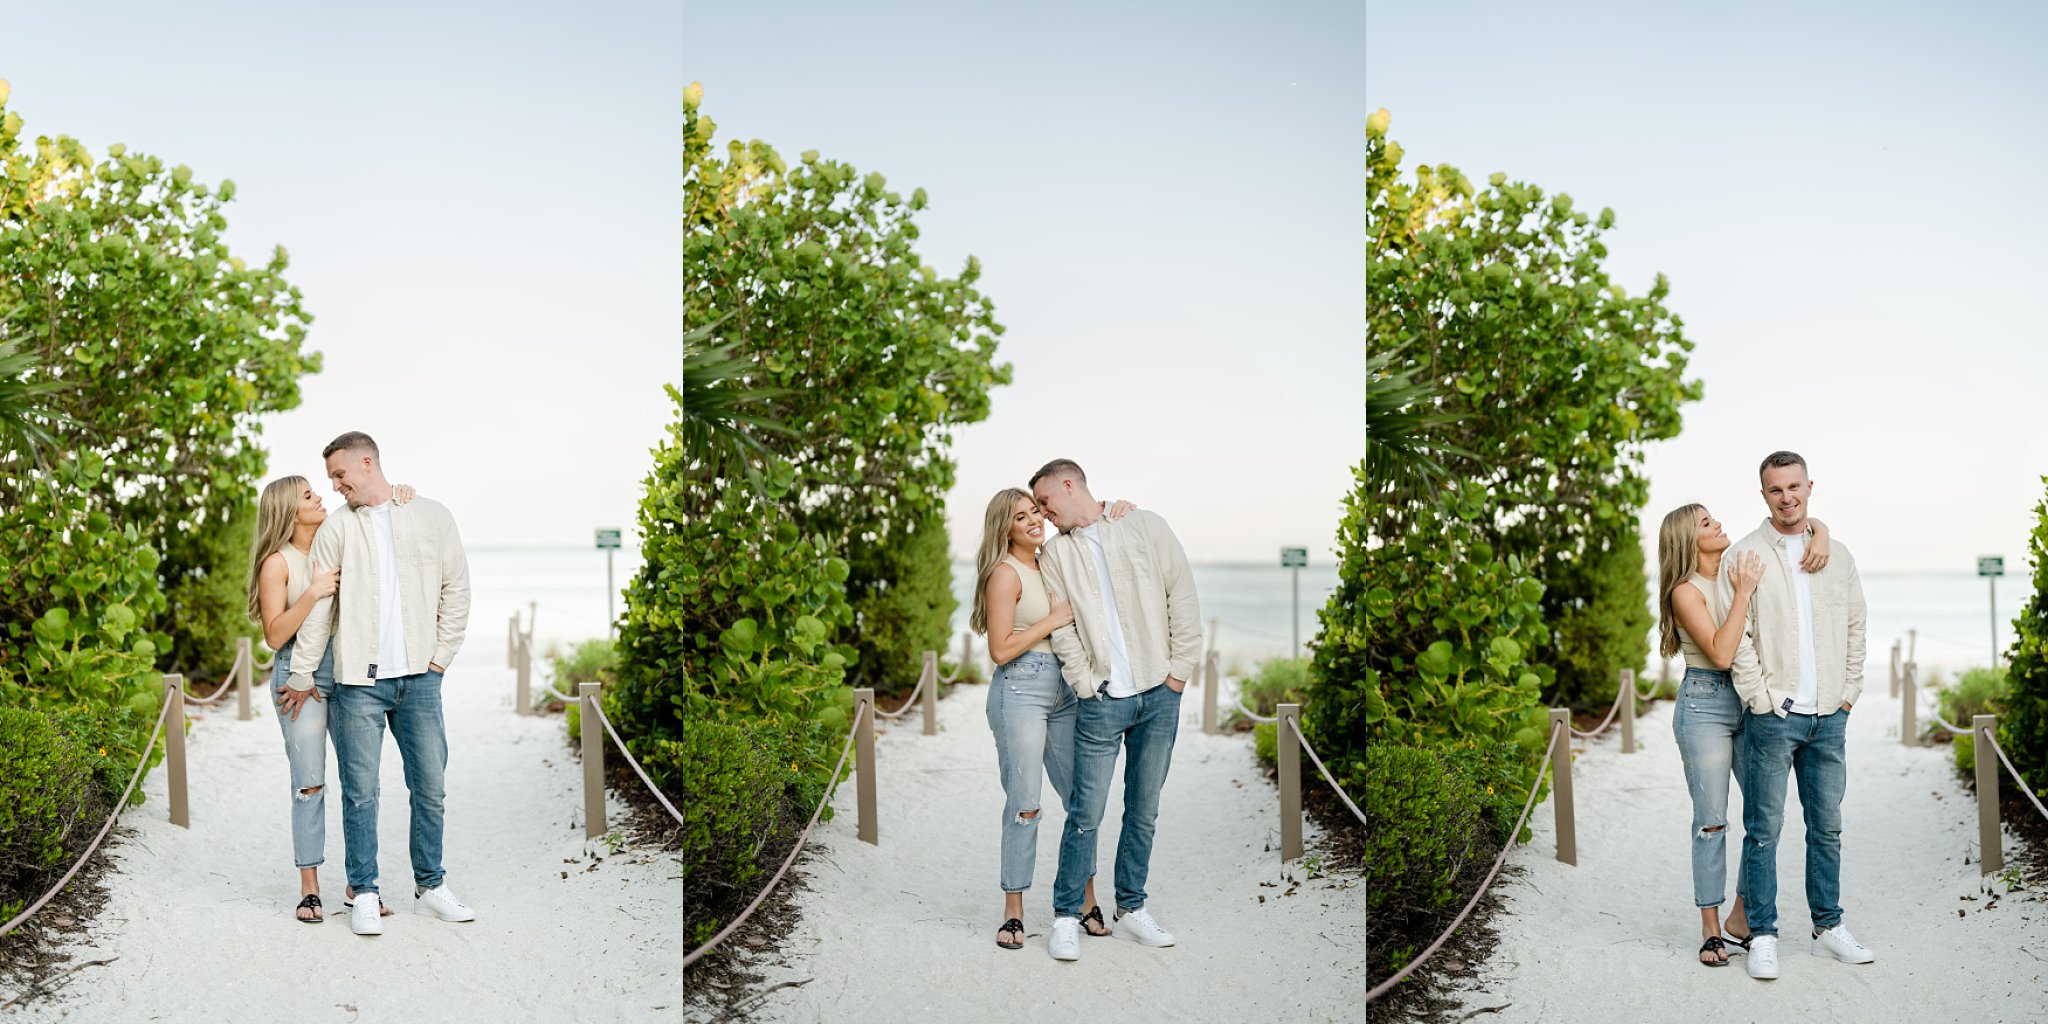 Southwest Florida engagement photographs. Couple embraces on the beach